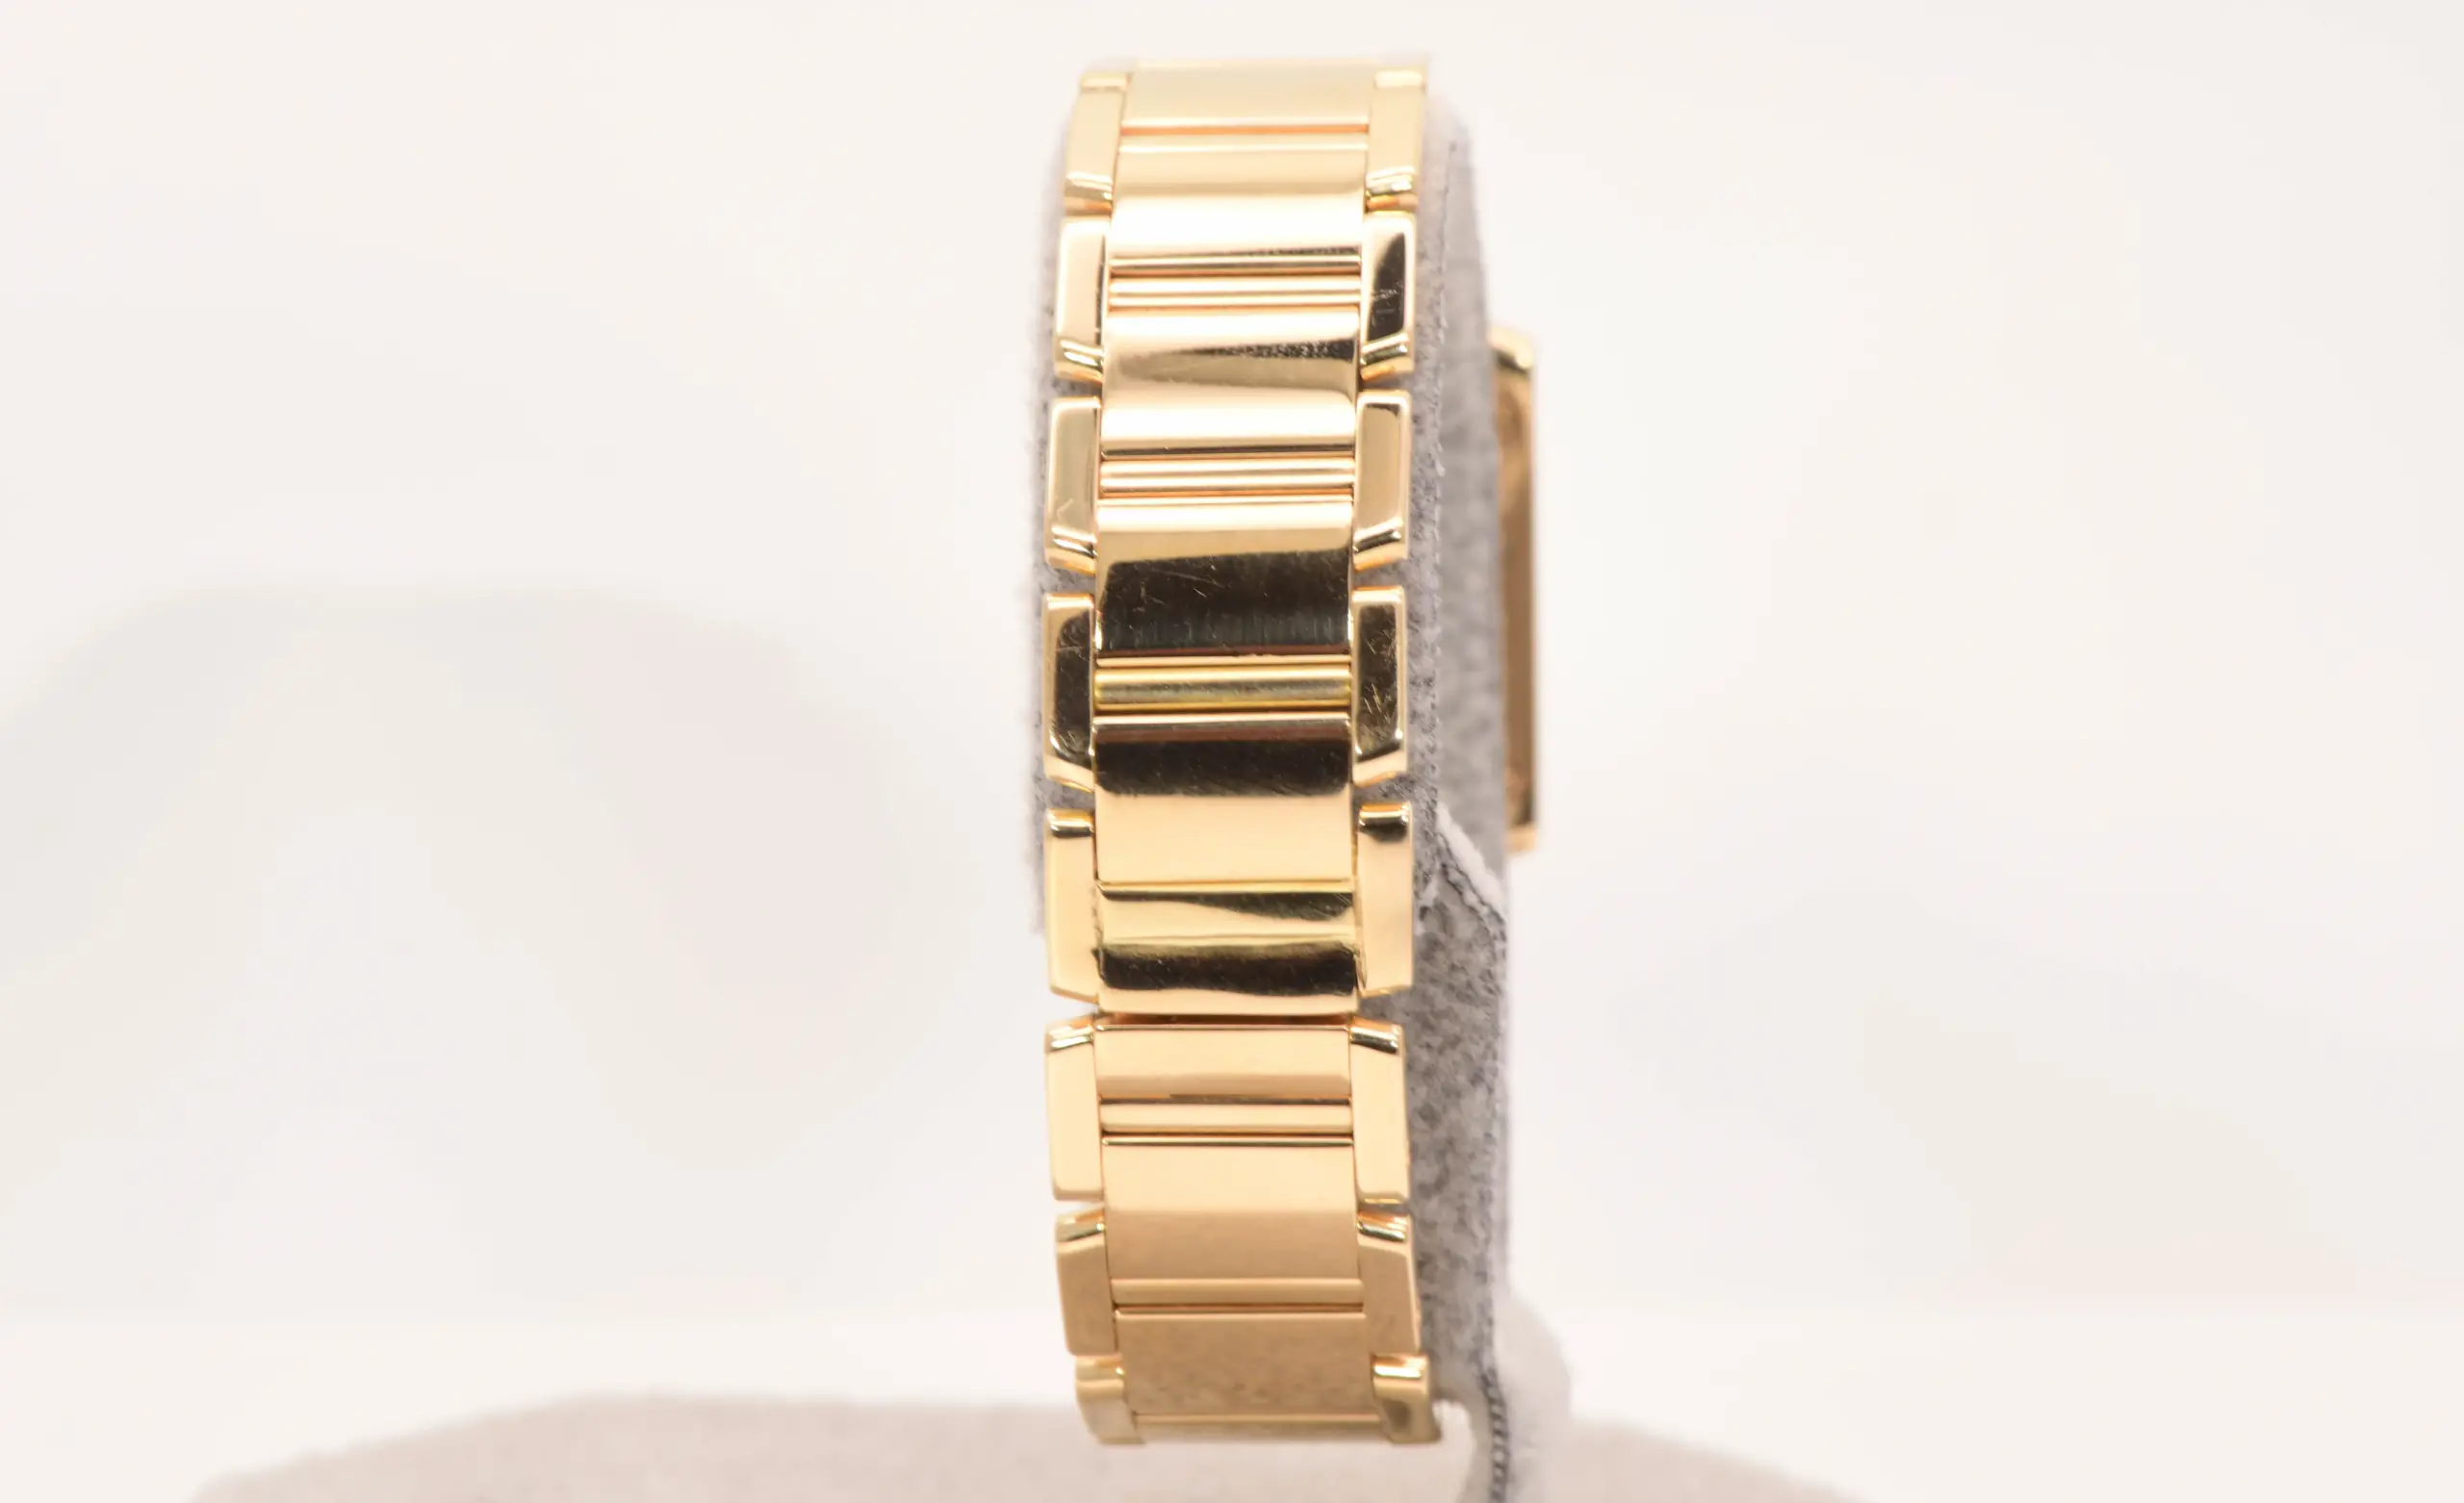 Cartier Tank Francaise Diamond Watch 20mm Yellow Gold